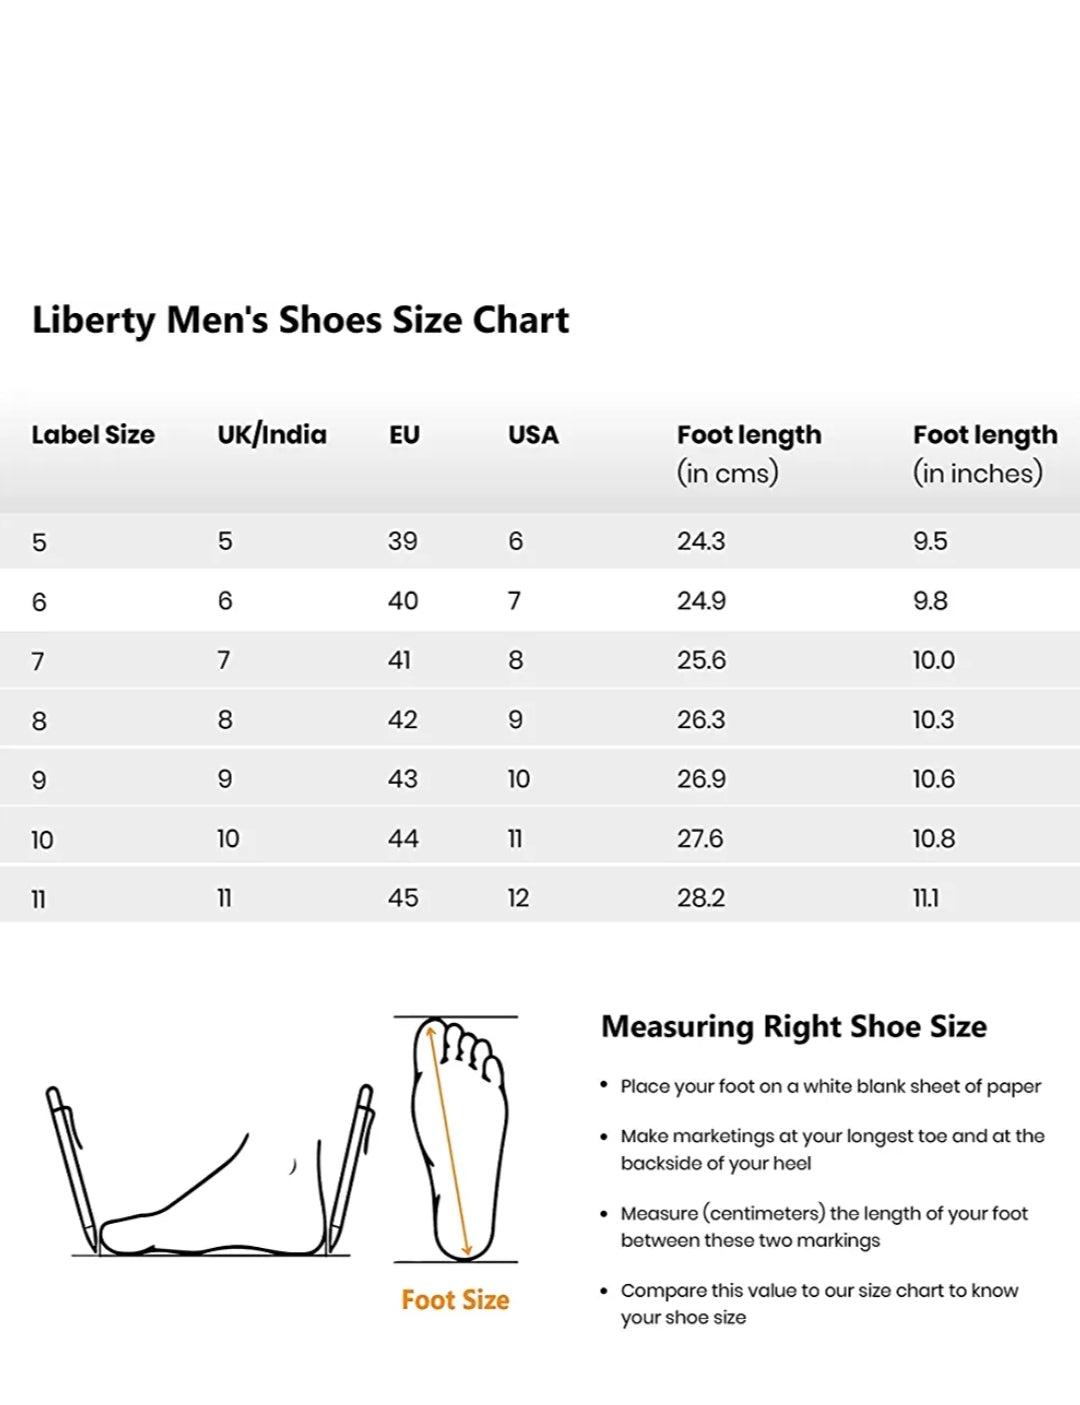 Liberty Warrior 88-46HSTG Jungle Boot for Men, Olive Green Men Canvas Boot